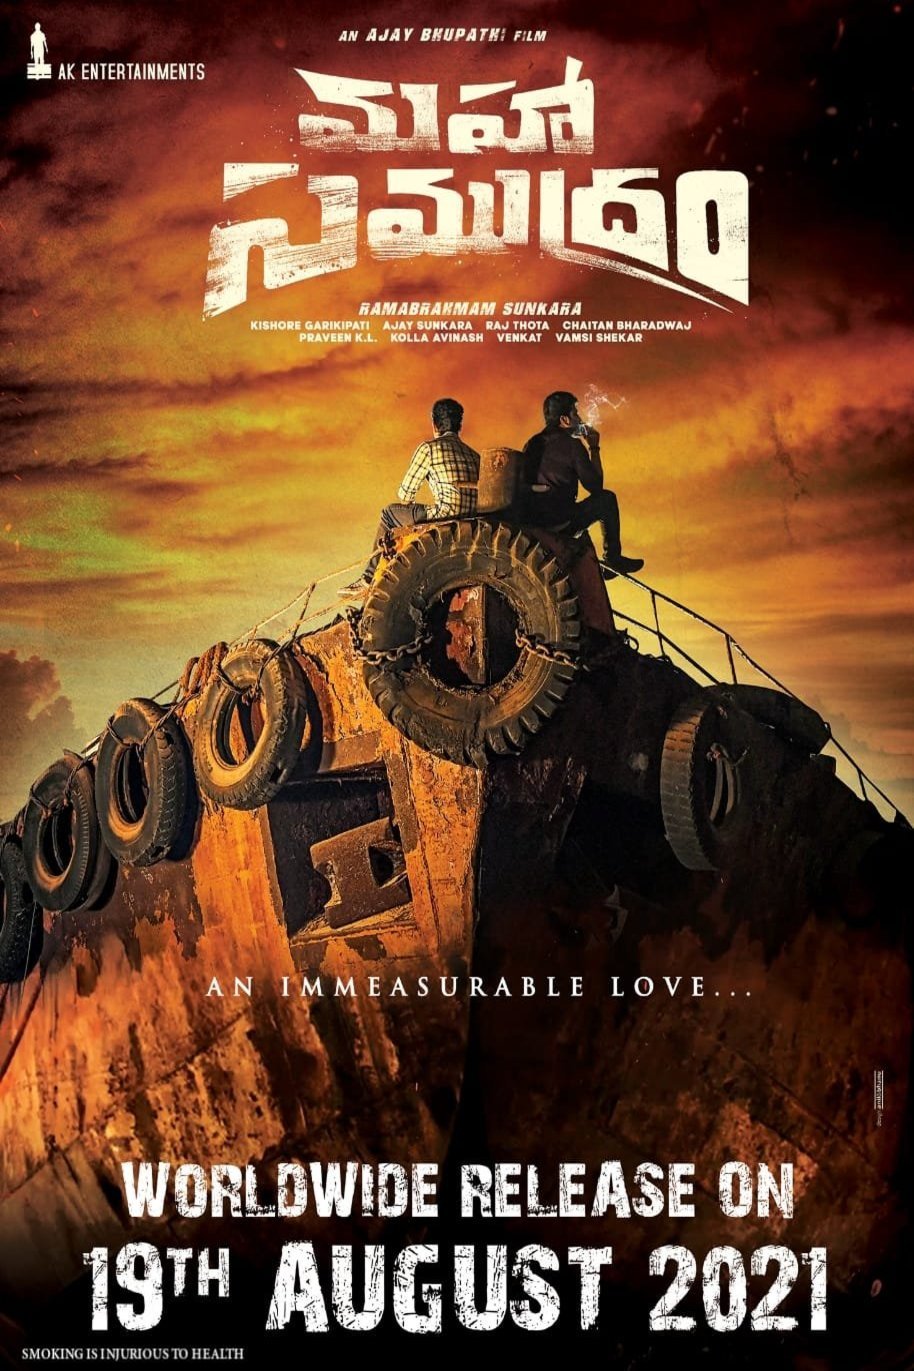 Telugu poster of the movie Maha Samudram